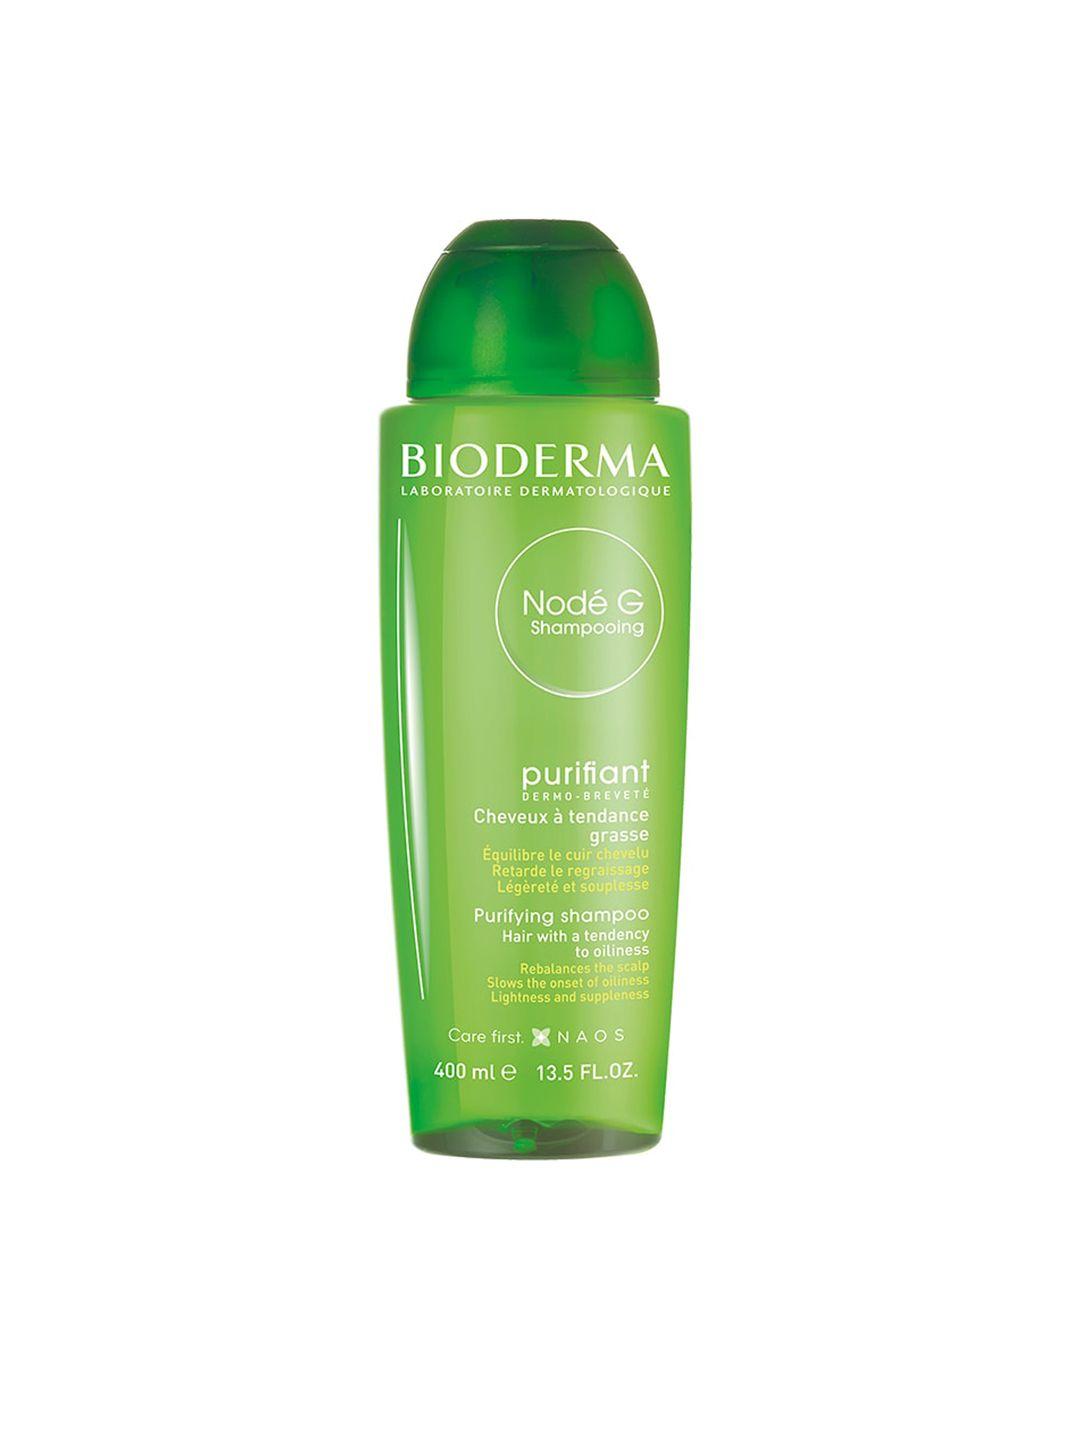 BIODERMA Node G Purifying Shampoo 400ml